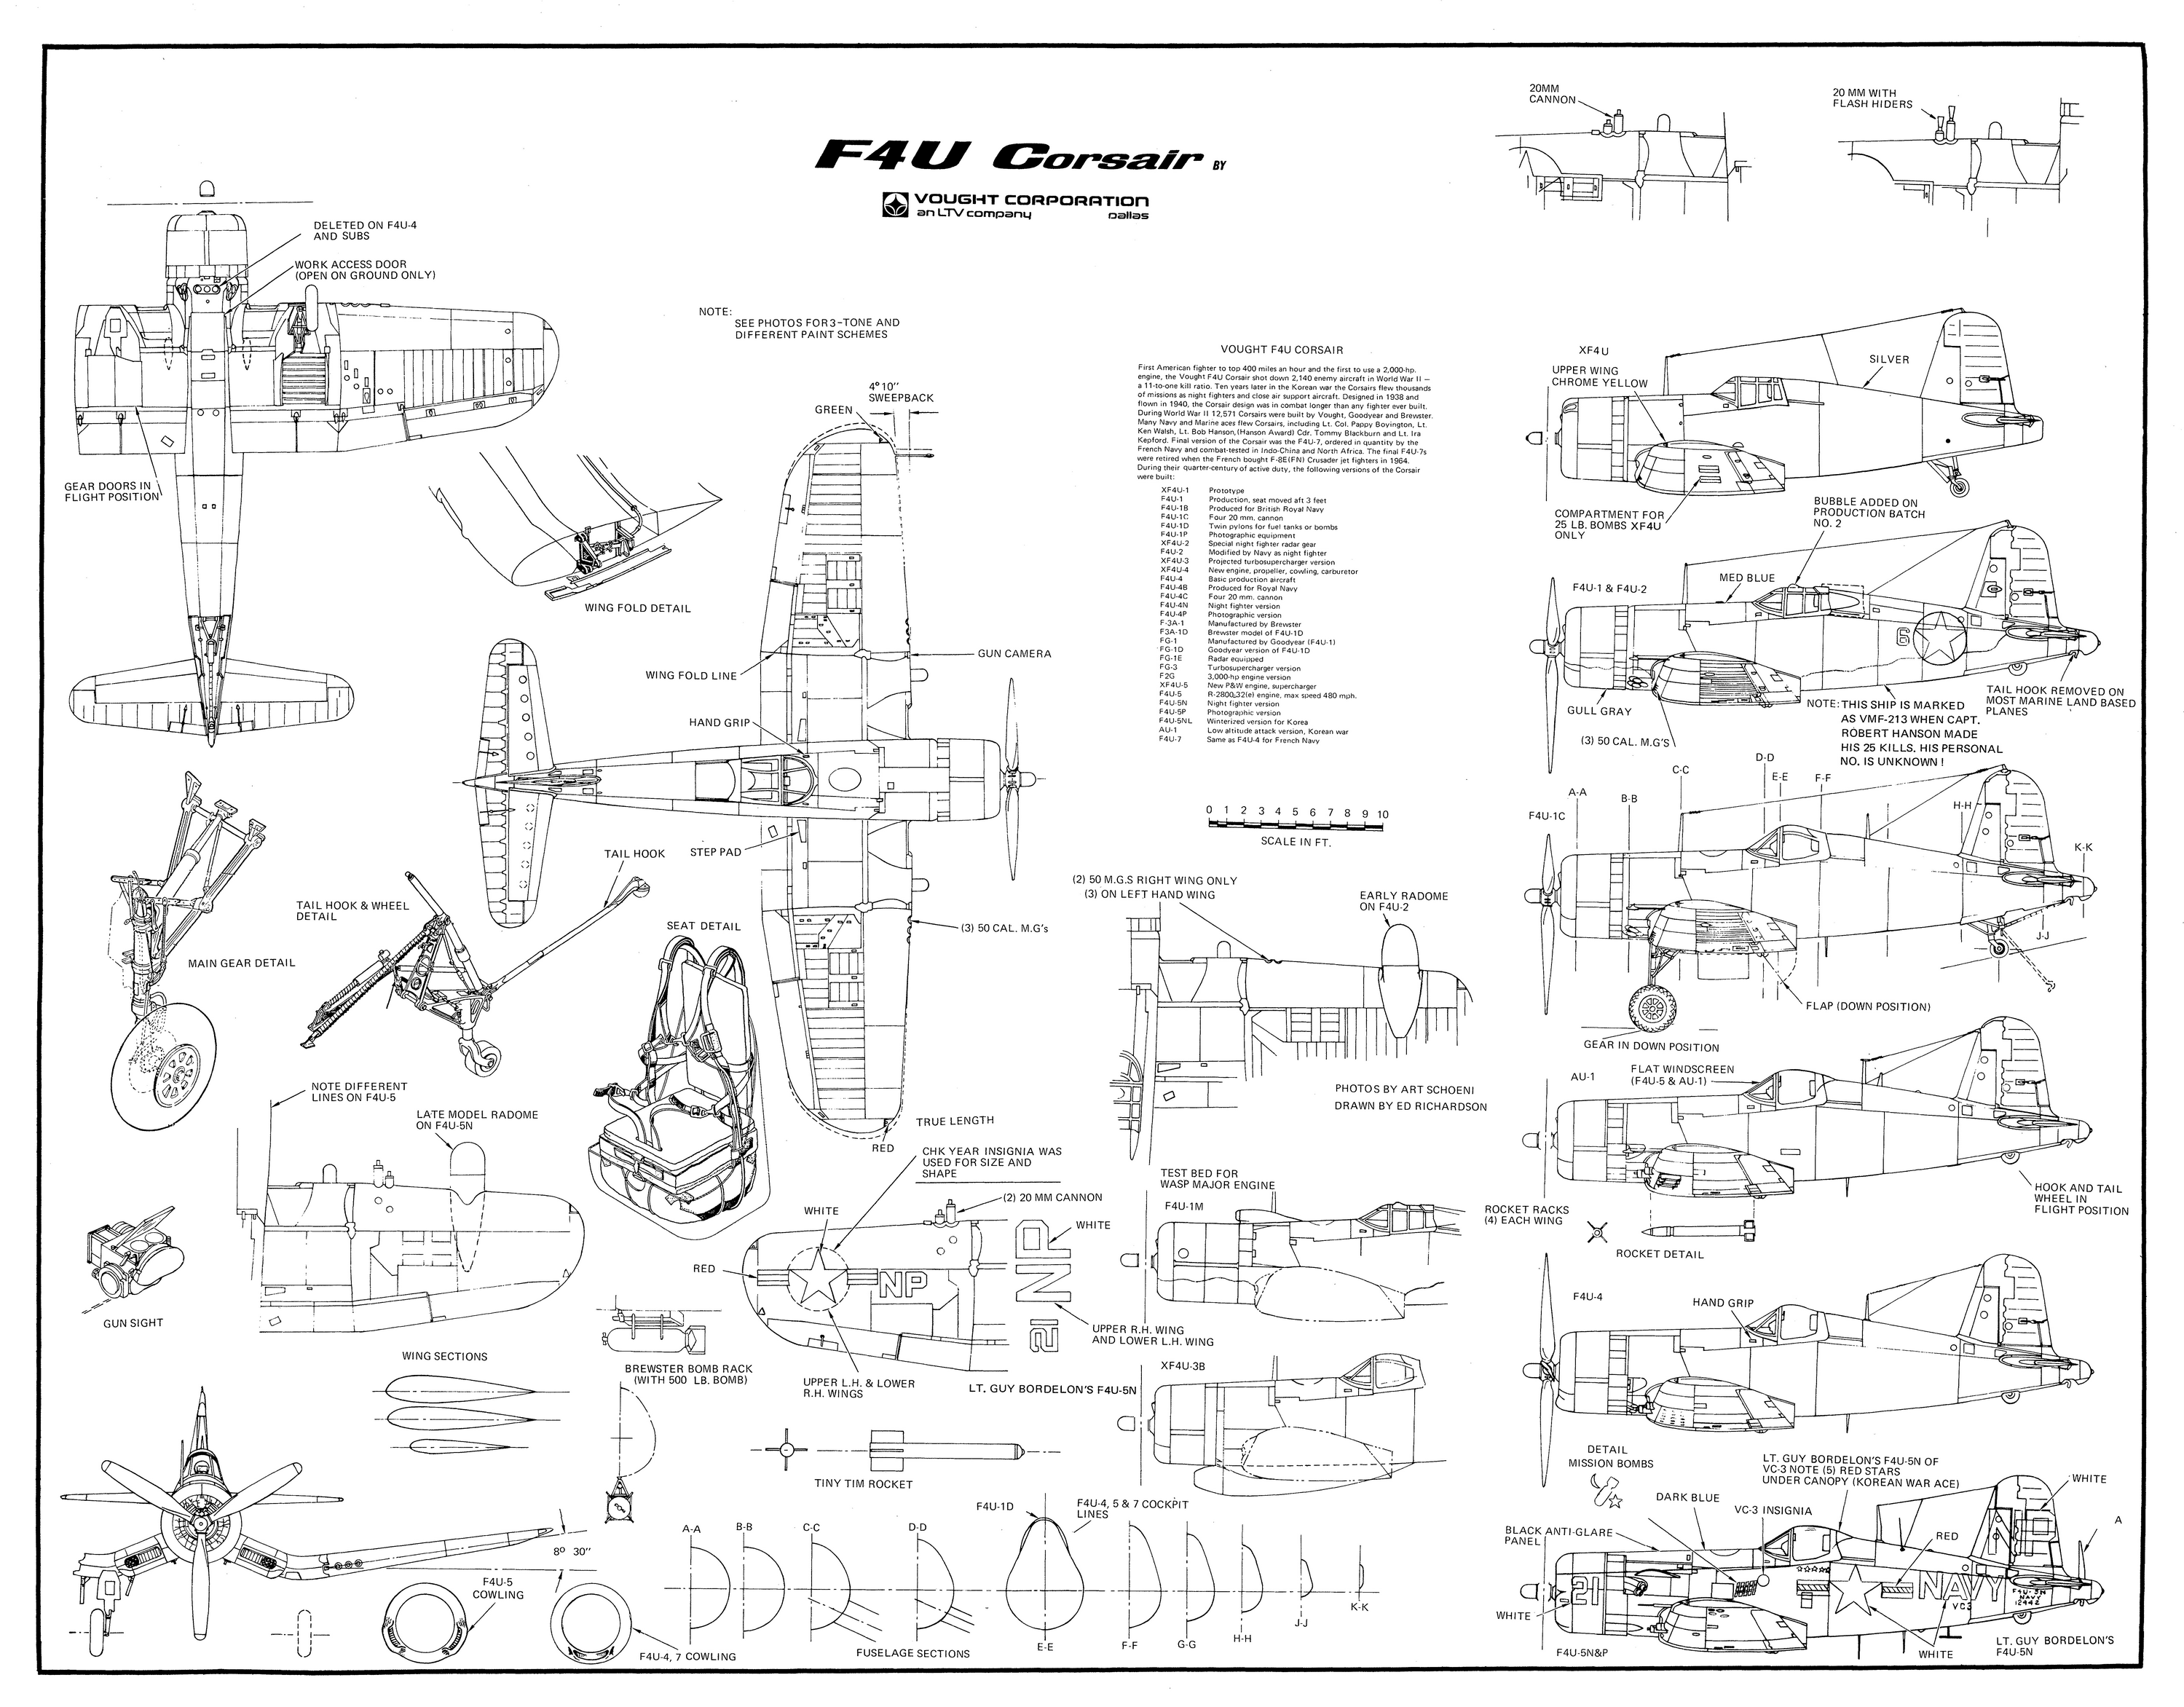 f4u corsair blueprints pdf file